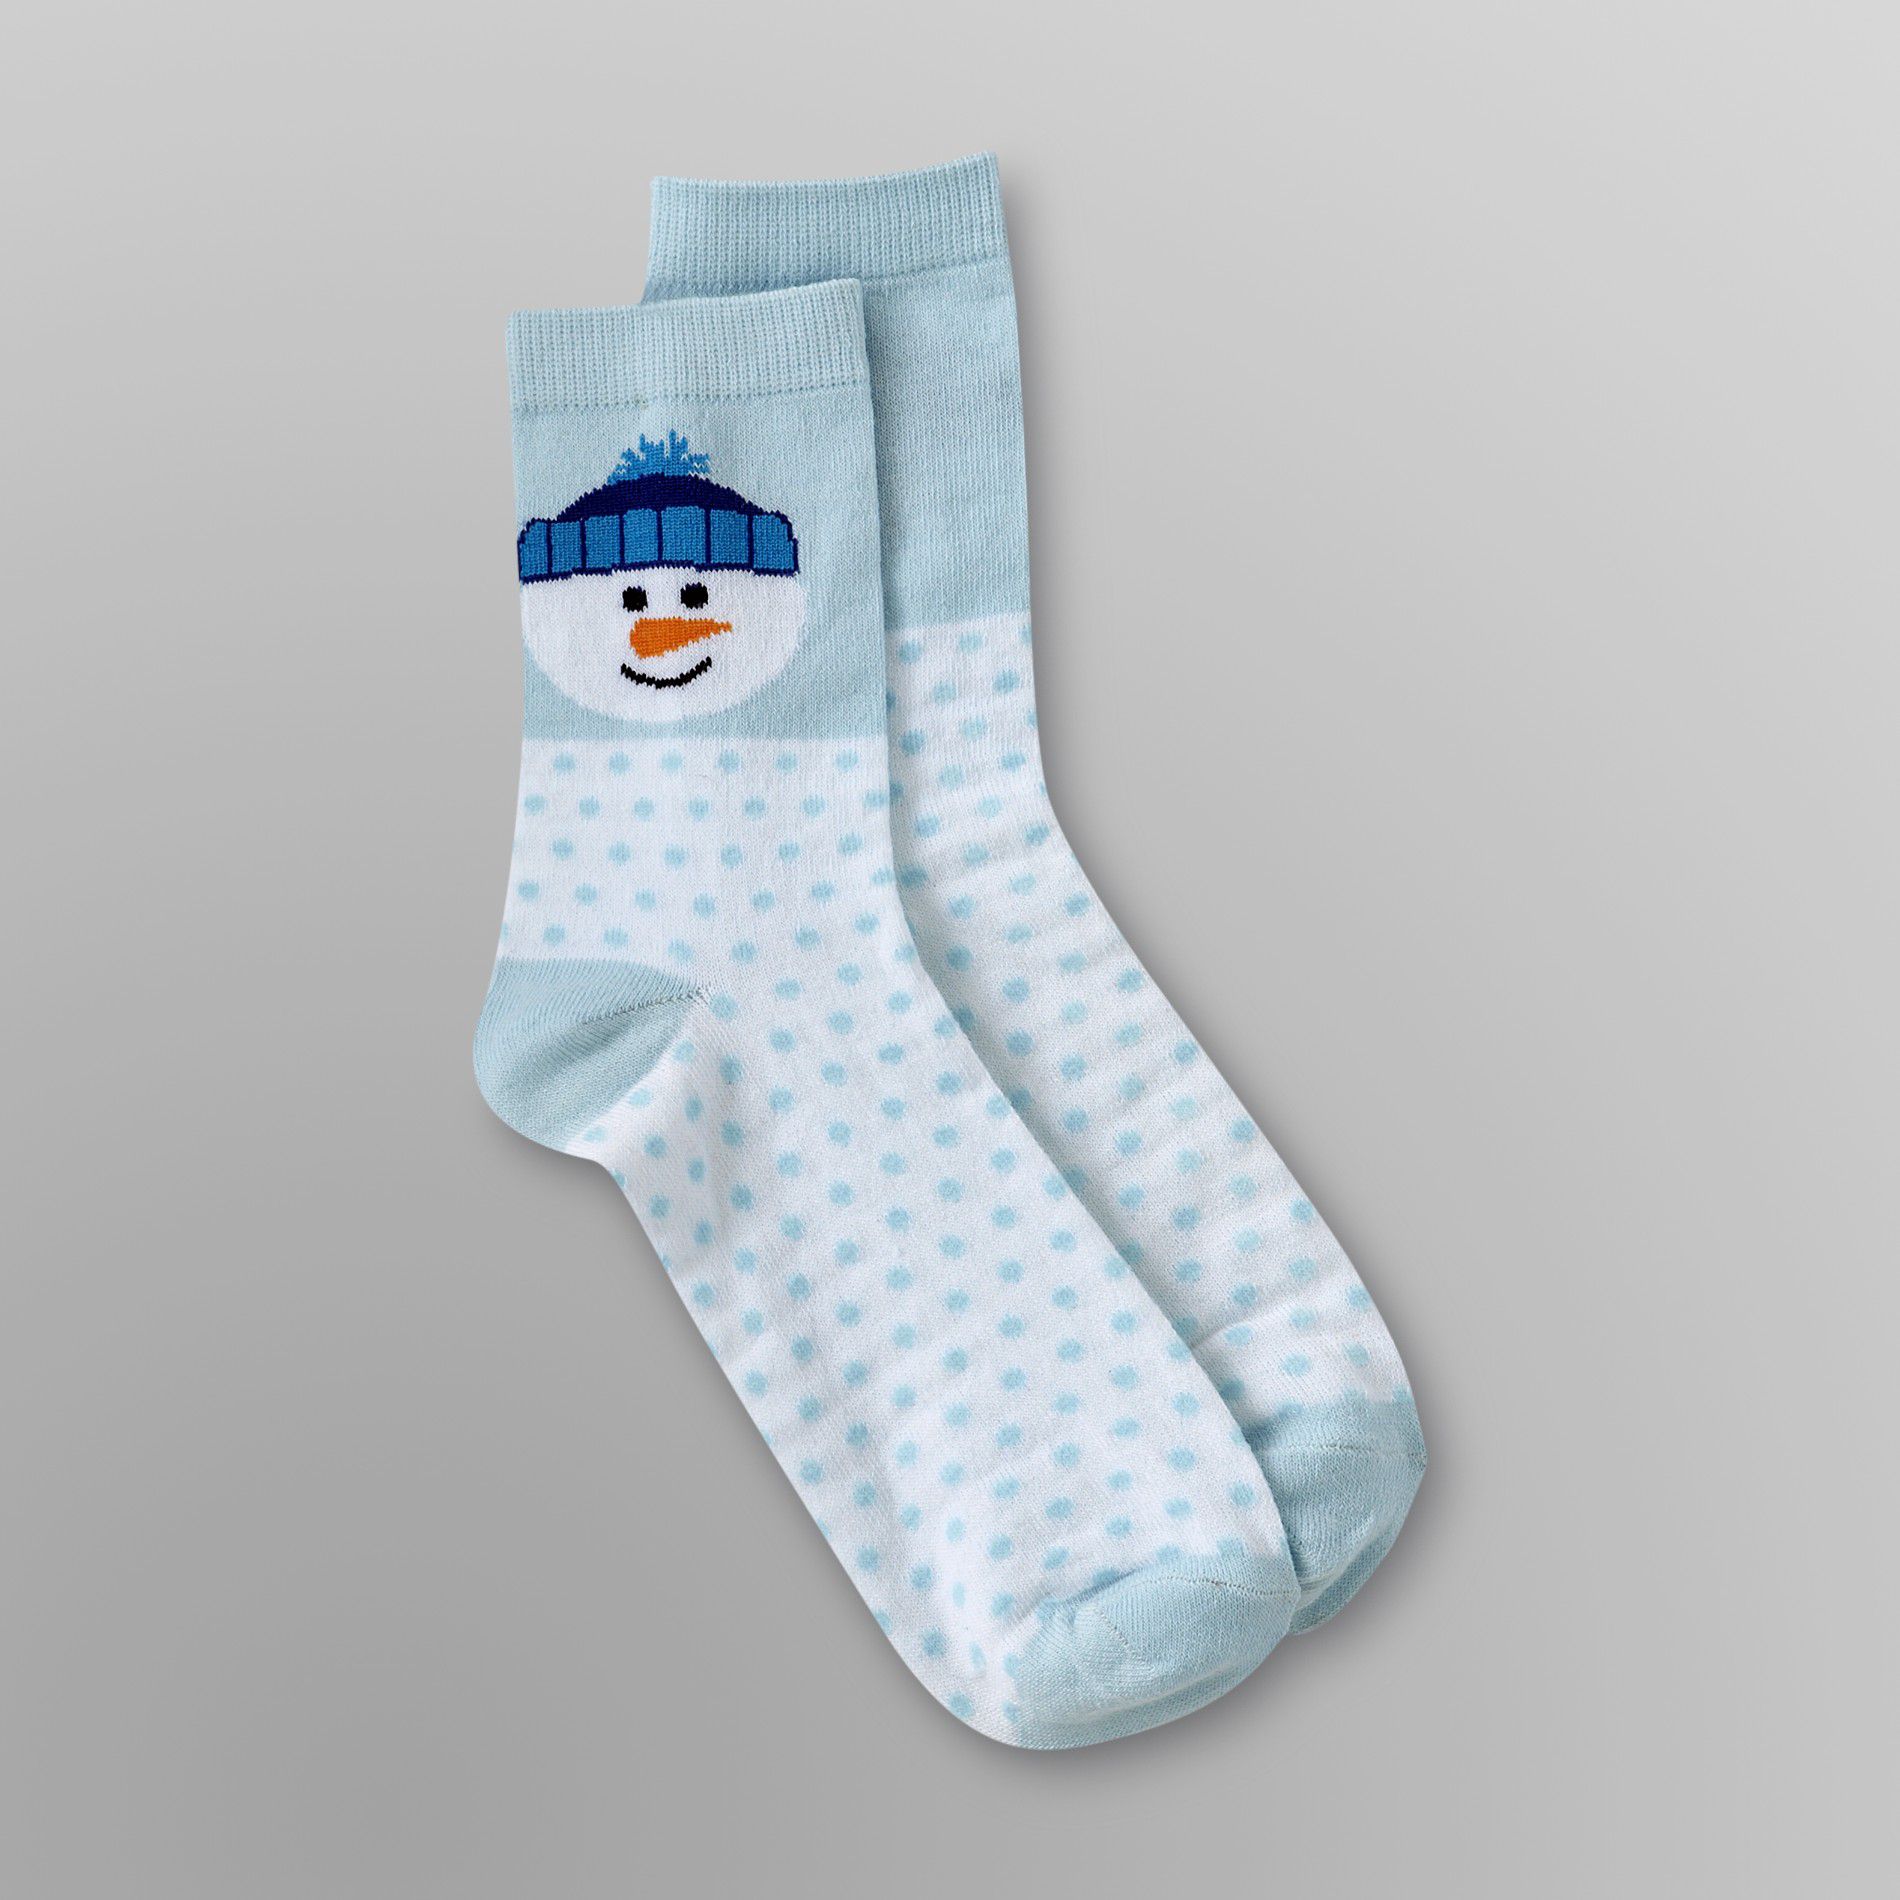 Joe Boxer Women's Holiday Socks - Smiley Snowman